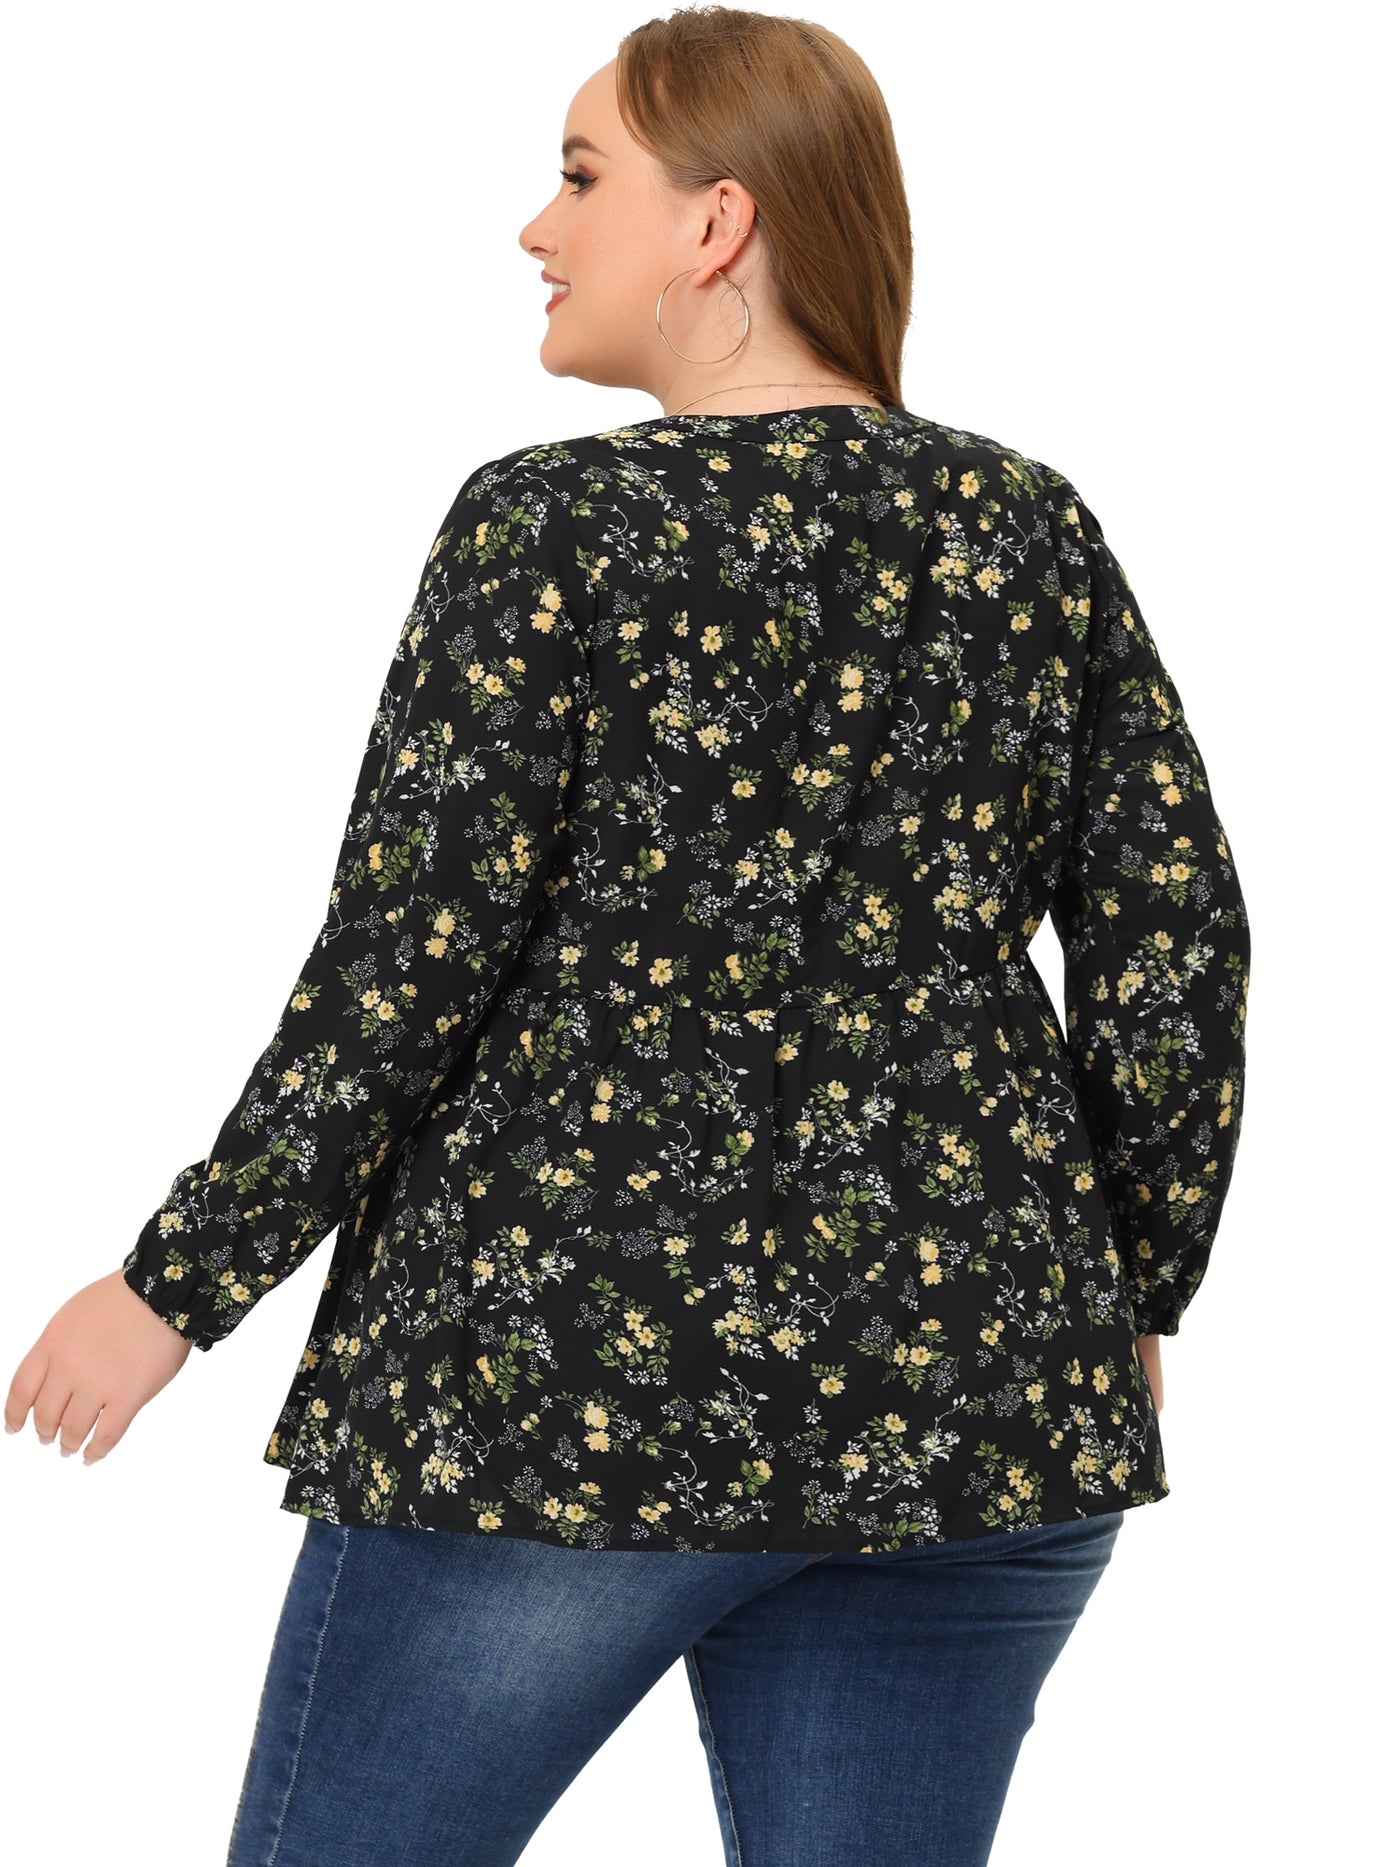 Bublédon Plus Size Blouses for Women Elegant Floral Printed V Neck Long Sleeve Chiffon Casual Tops